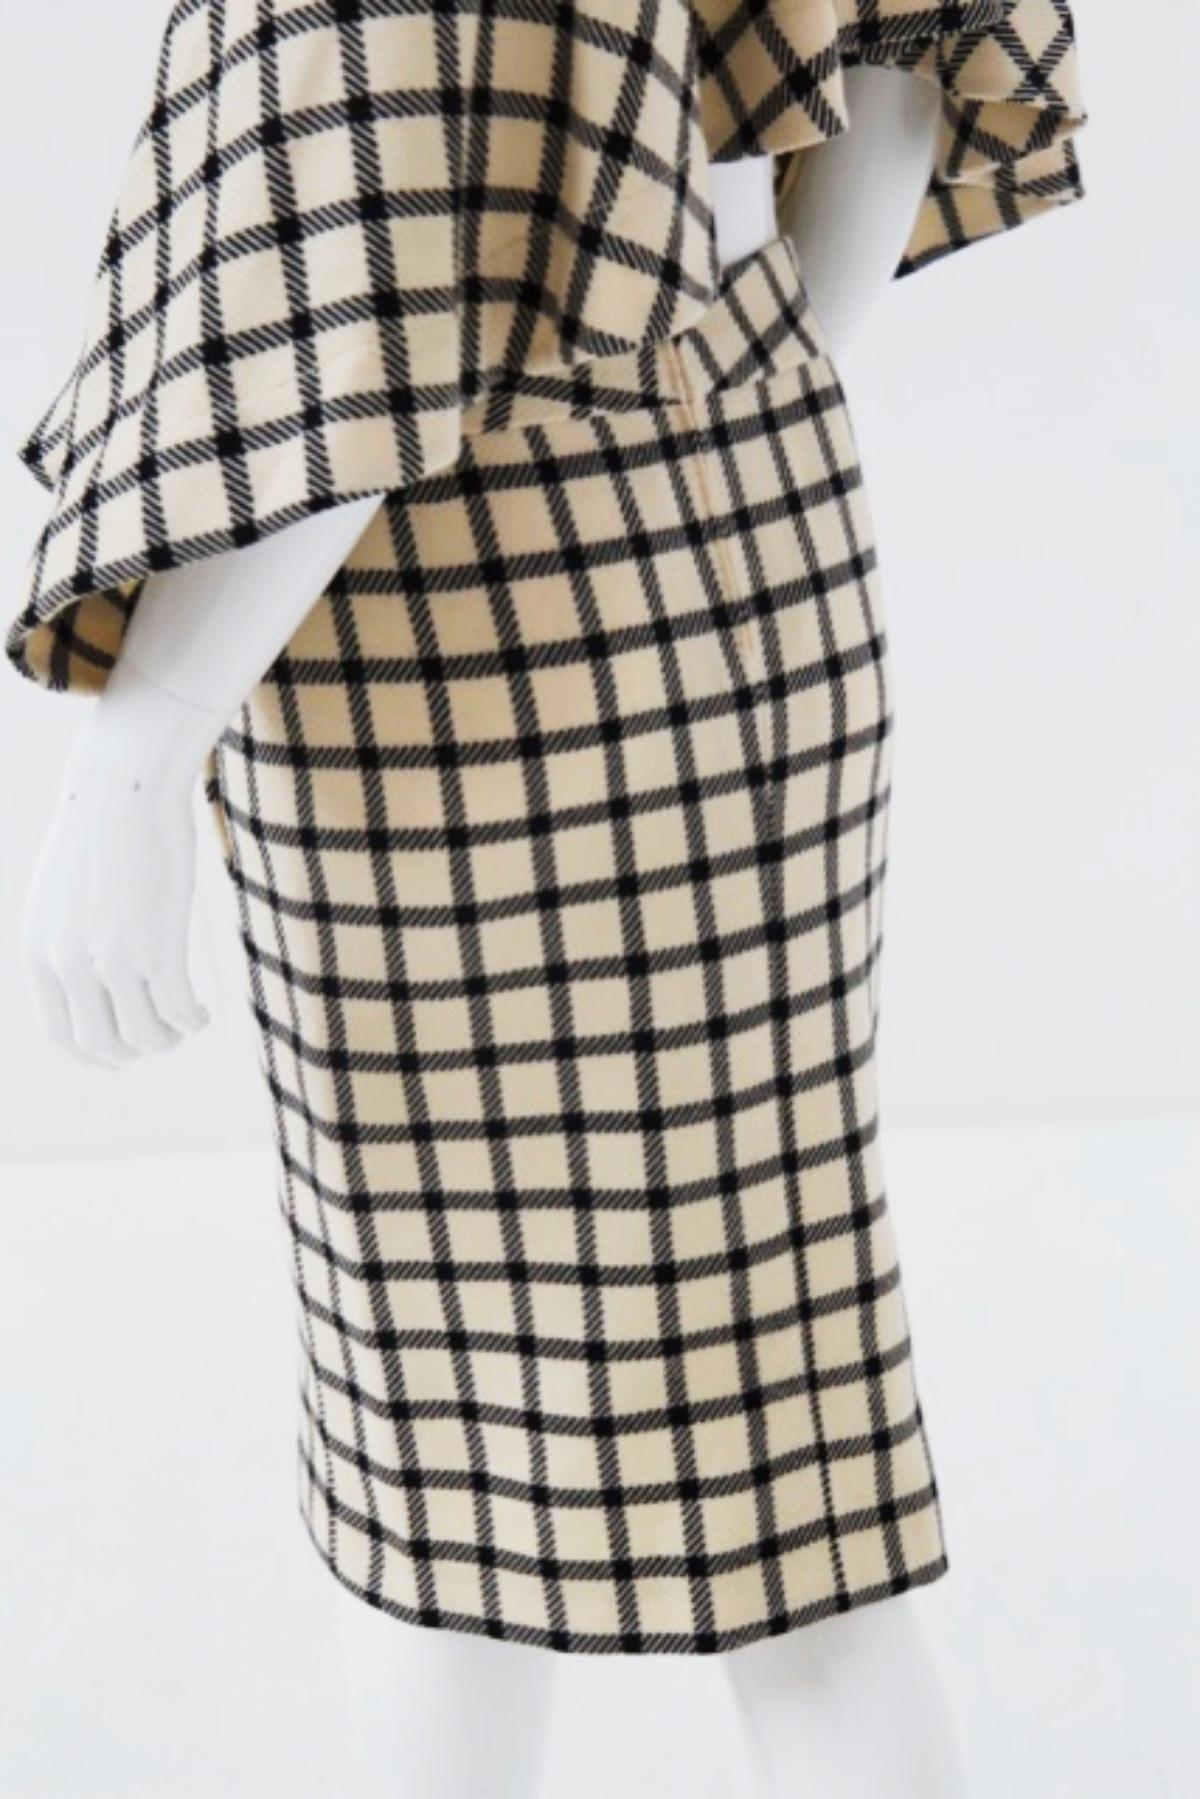 Pierre Cardin Vintage Check Wool Suit For Sale 8